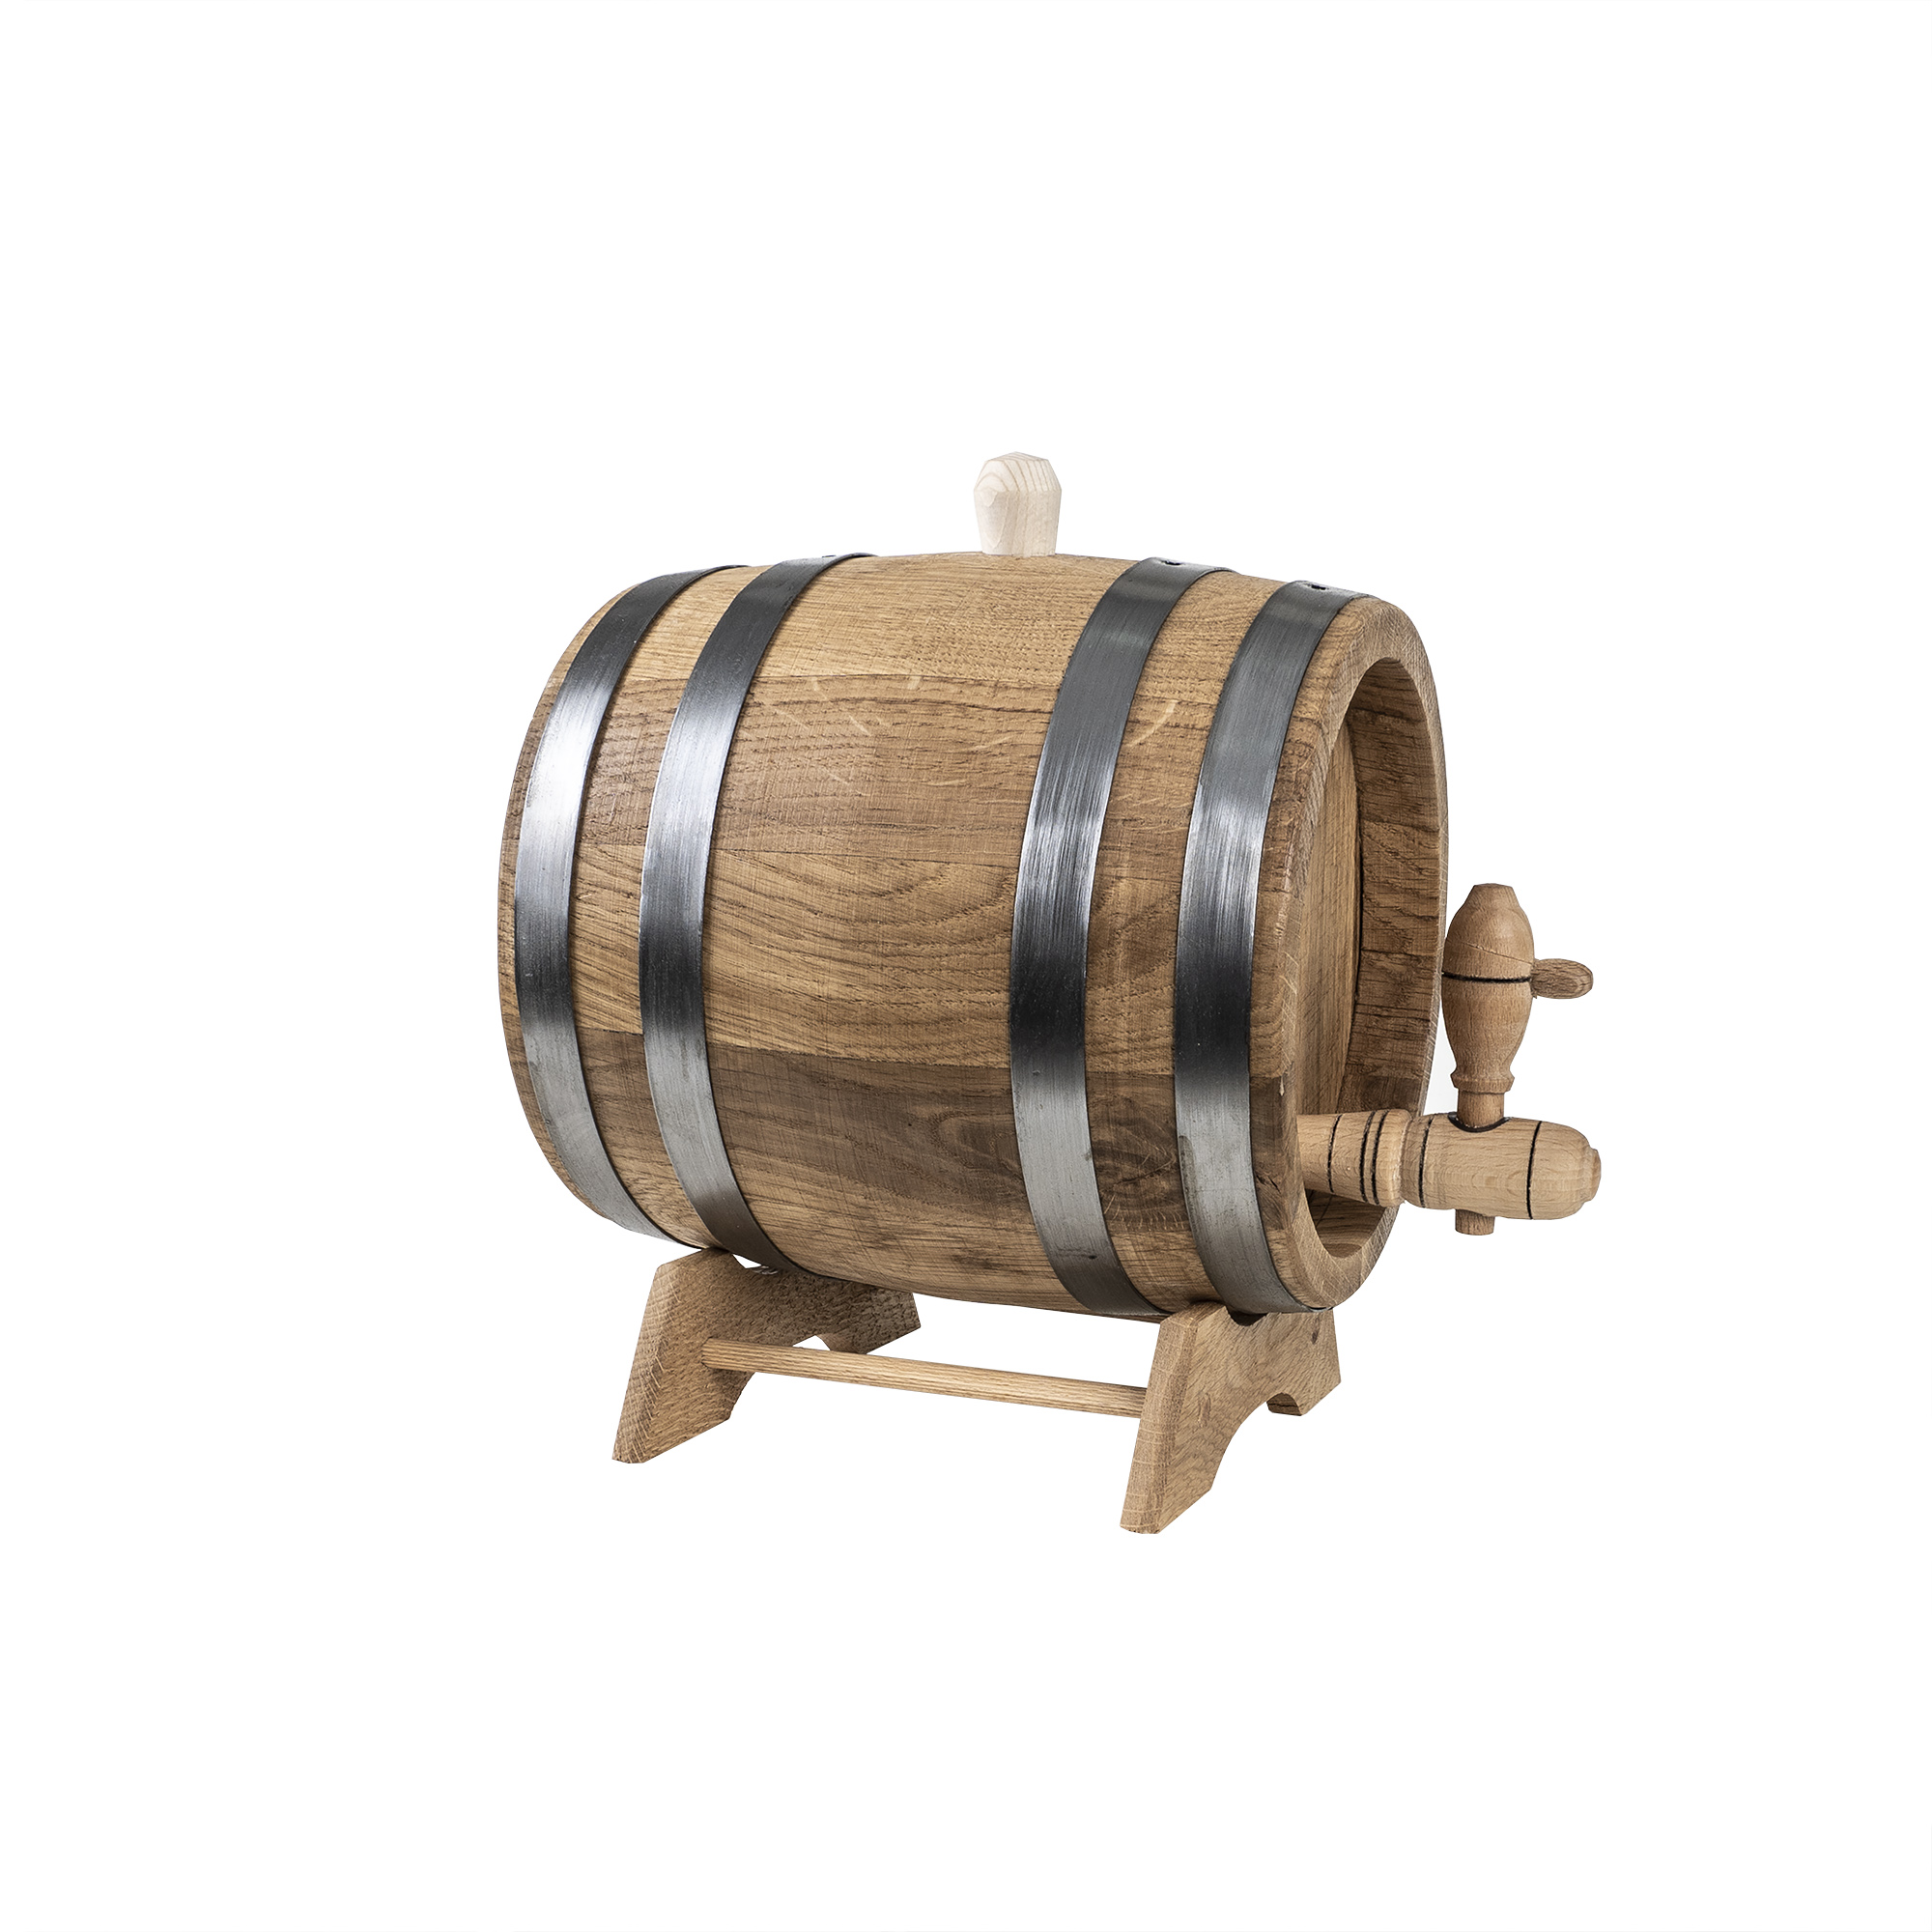 Butoi de vin cu robinet, din lemn masiv de stejar, capacitate 3L / EXT 8059